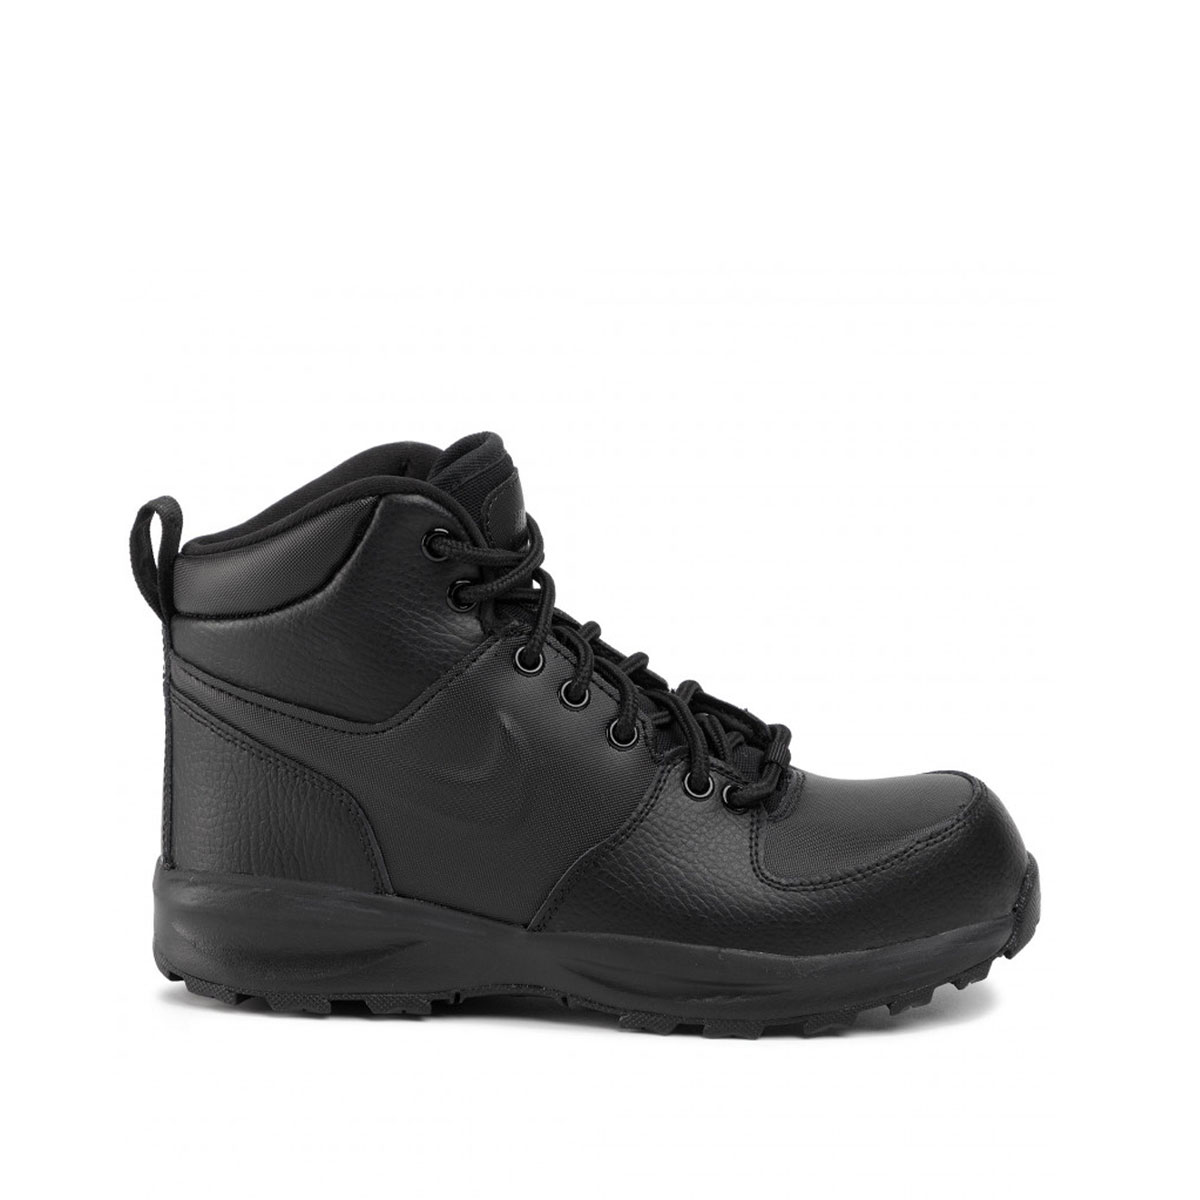 Nike Manoa Leather  TTRBQ5372-001